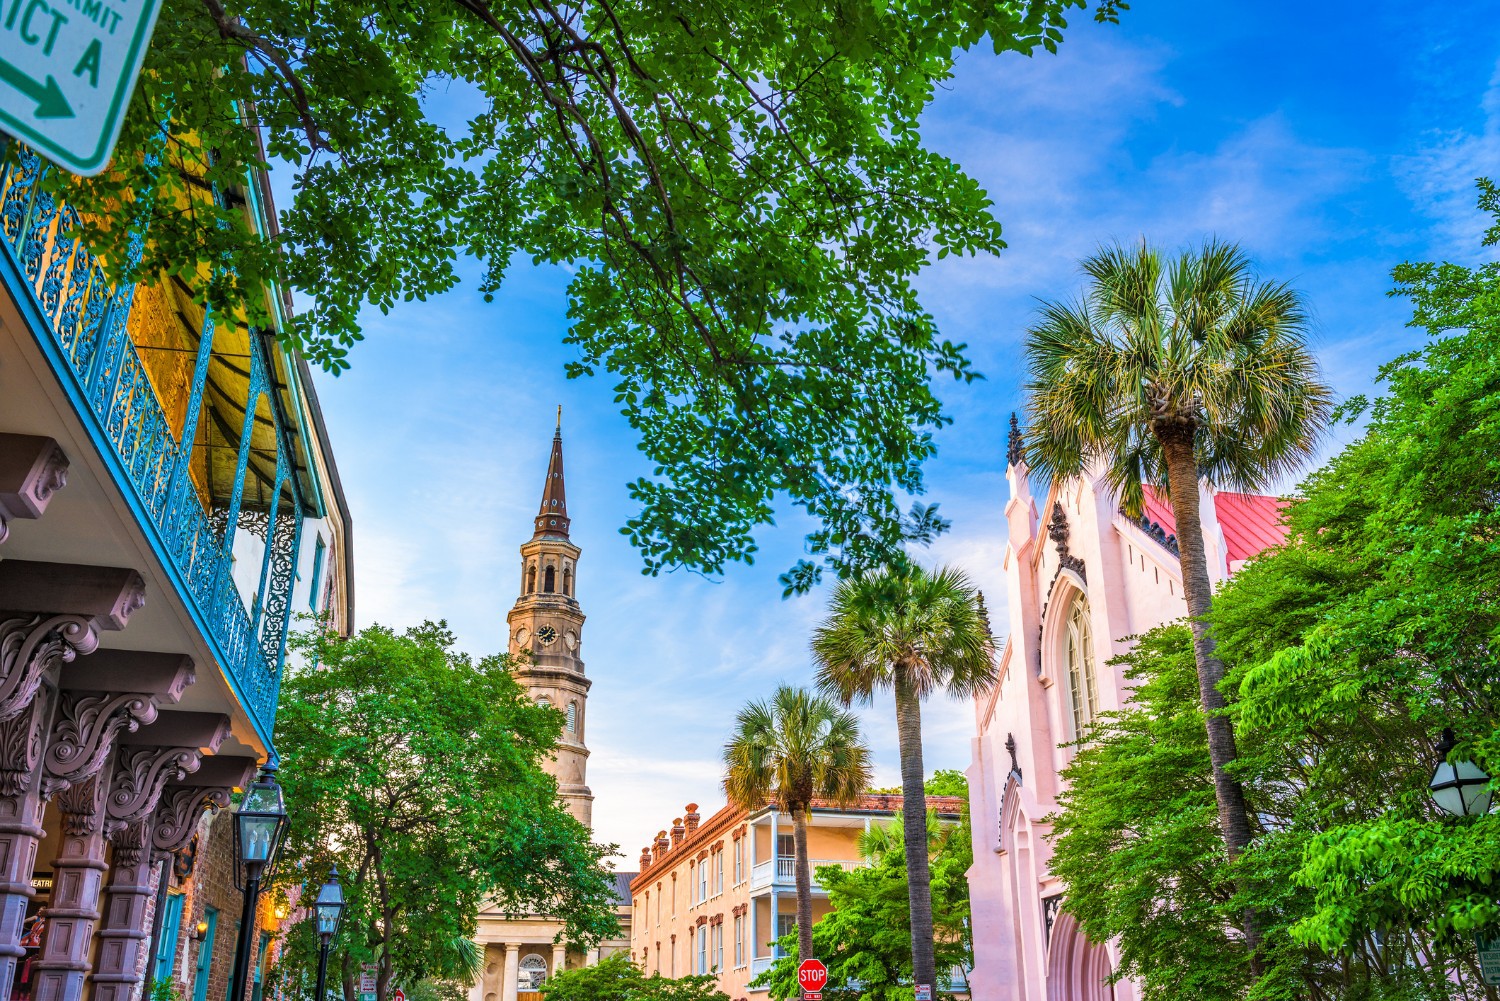 Discover Charleston